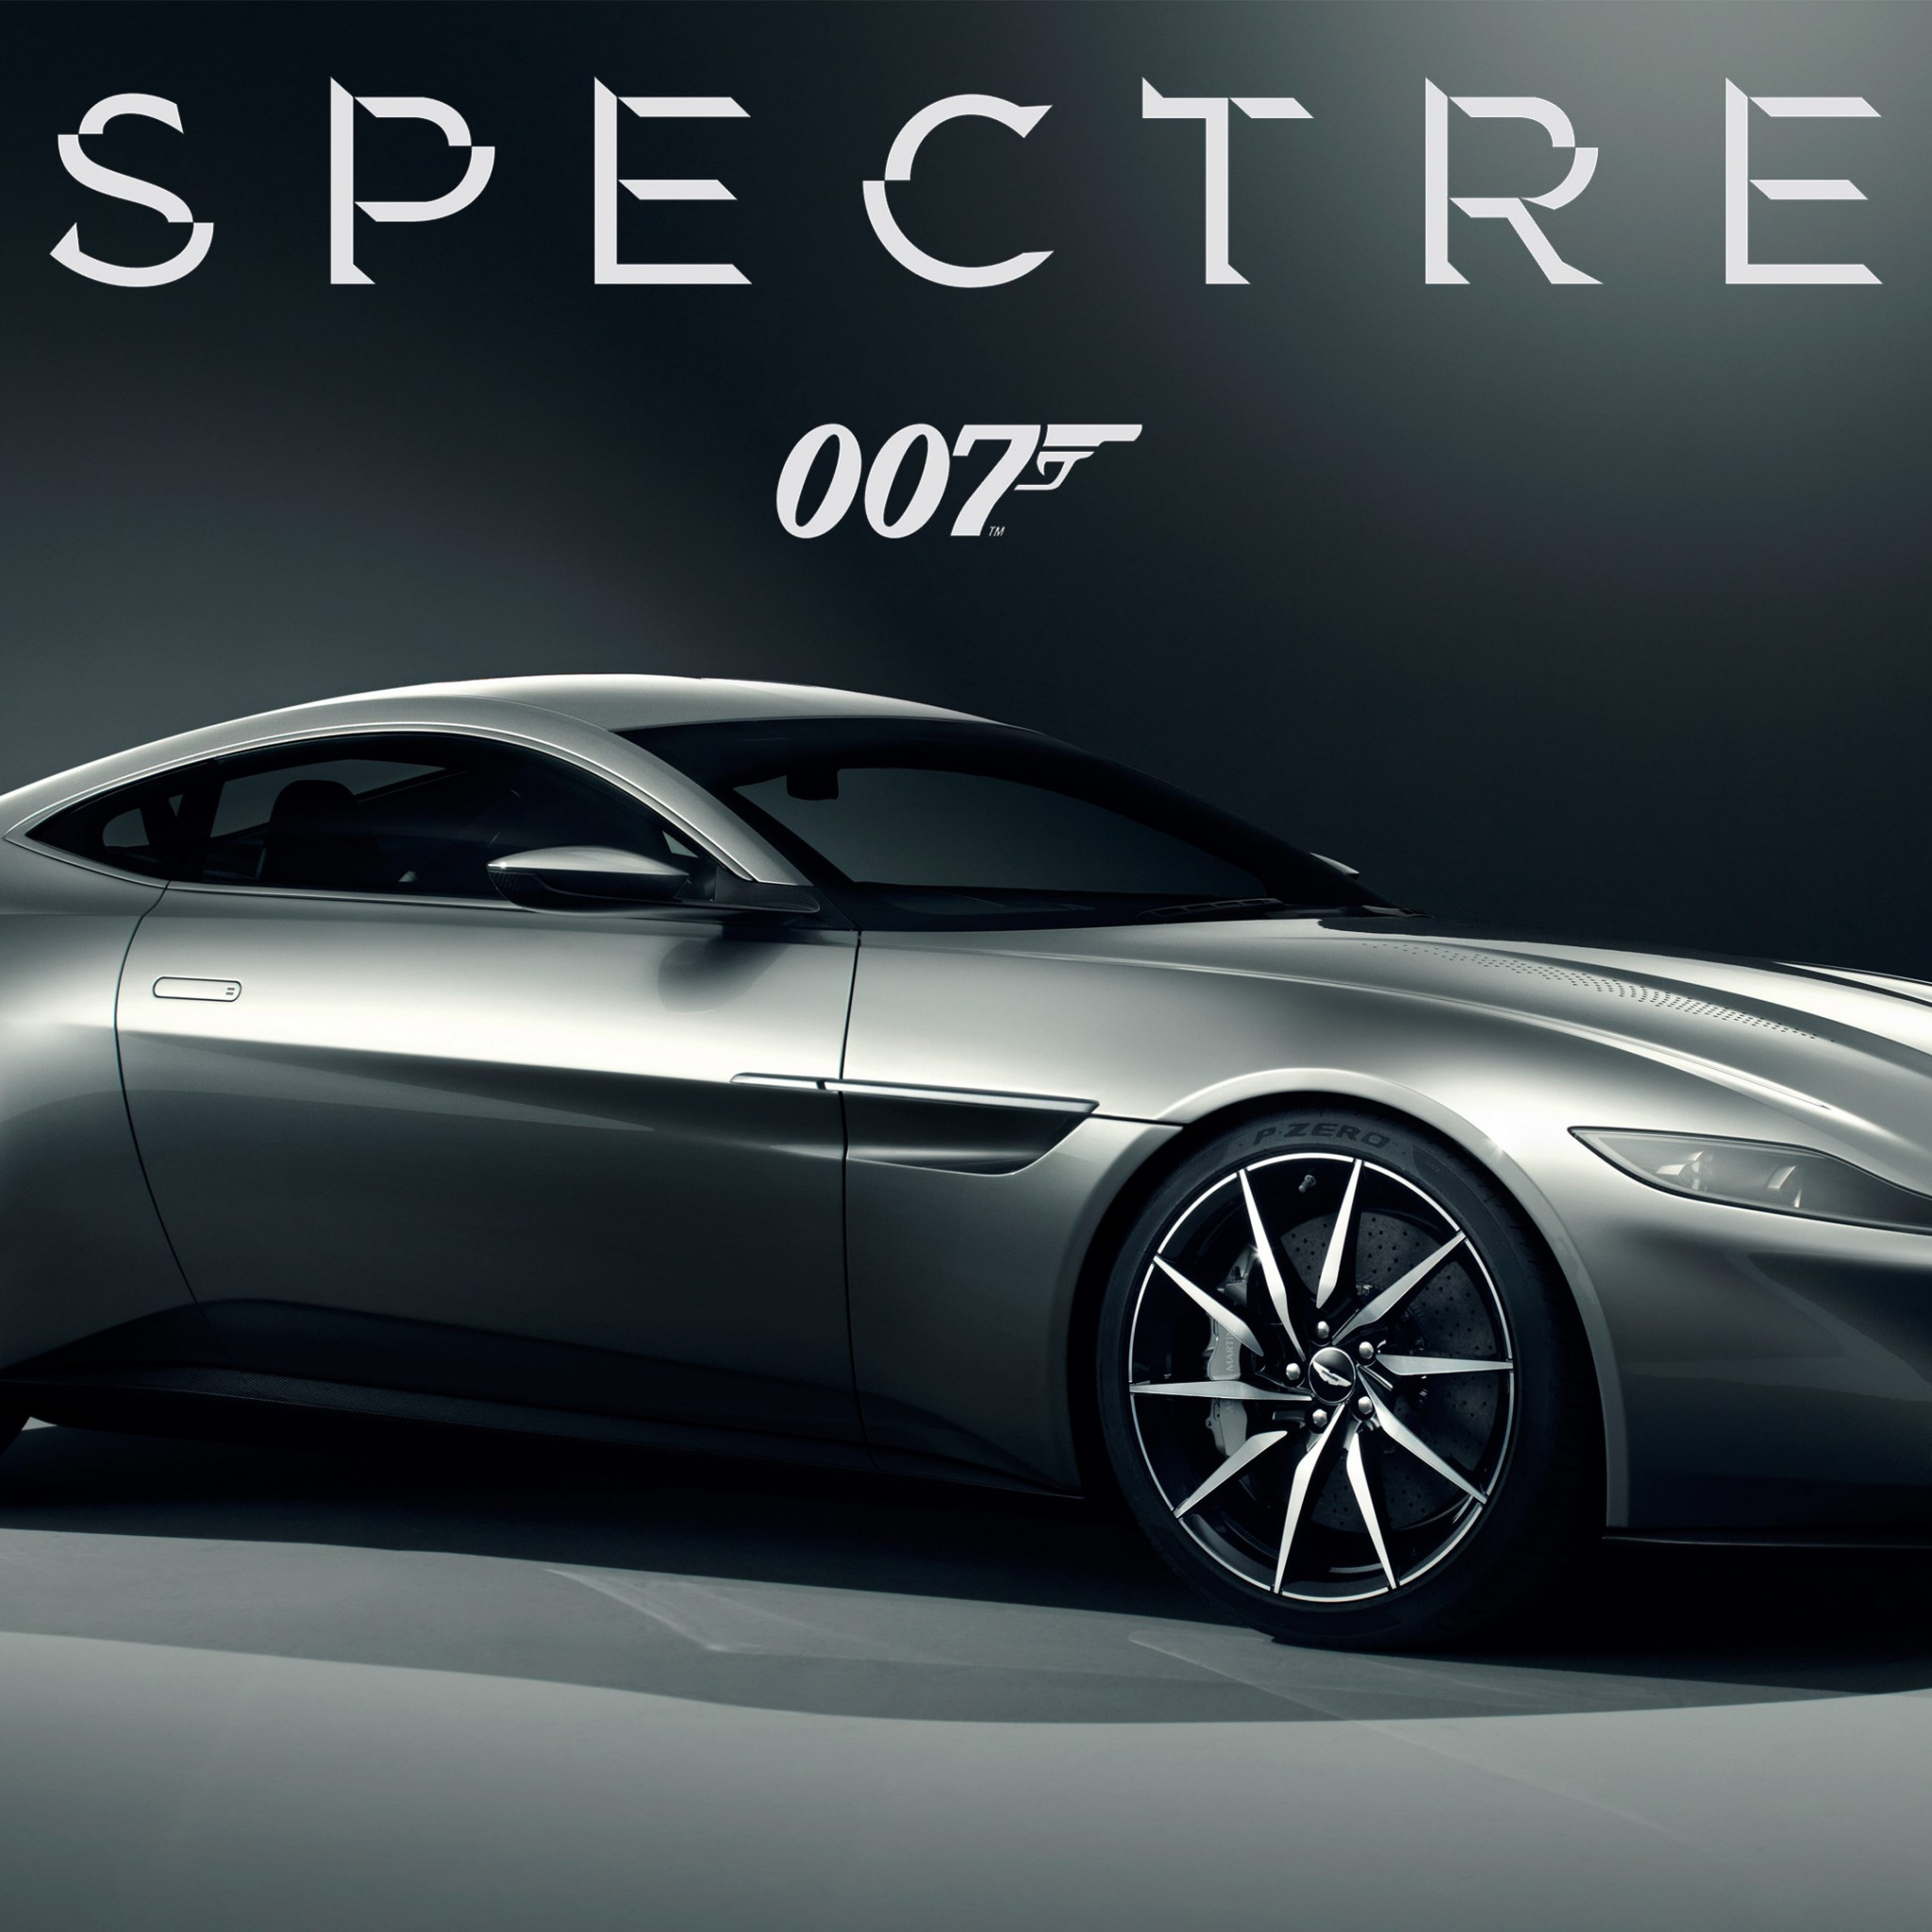 Aston Martin DB10 007 Spectre car wallpaper 2048x2048